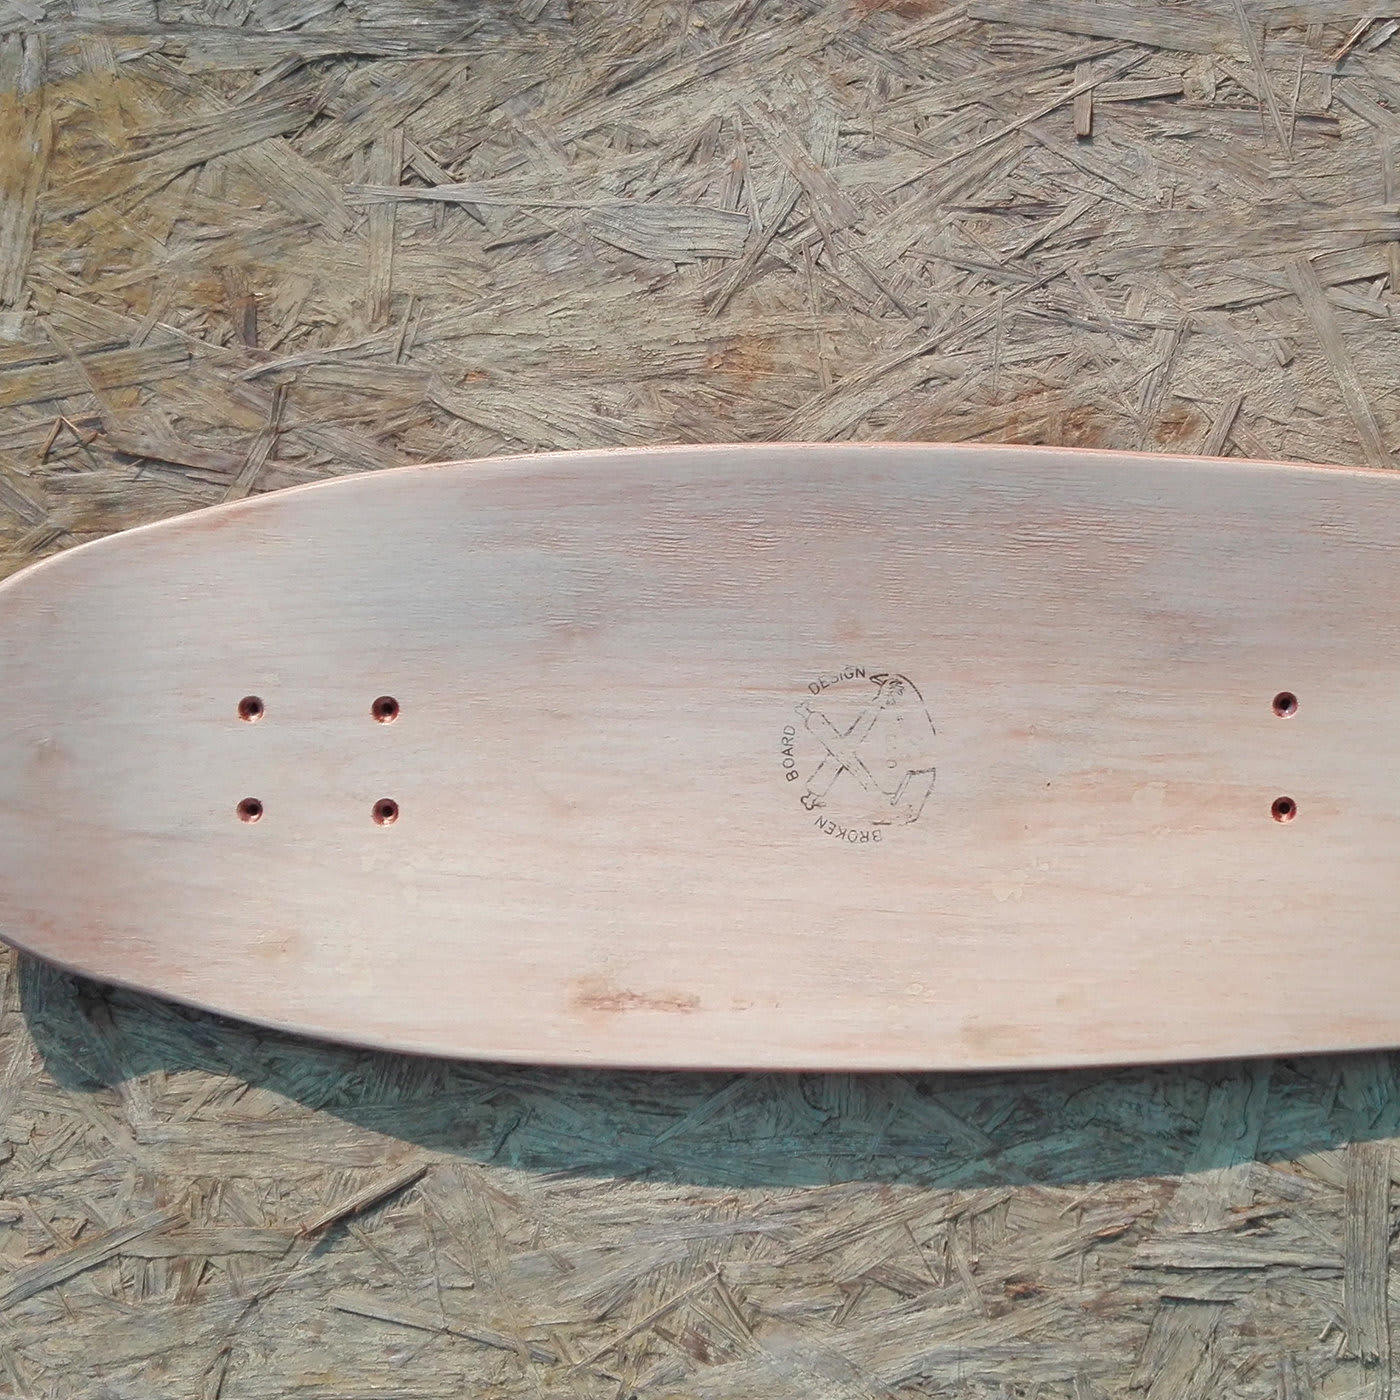 Mandello Cruiser # 1 - Broken Board Design